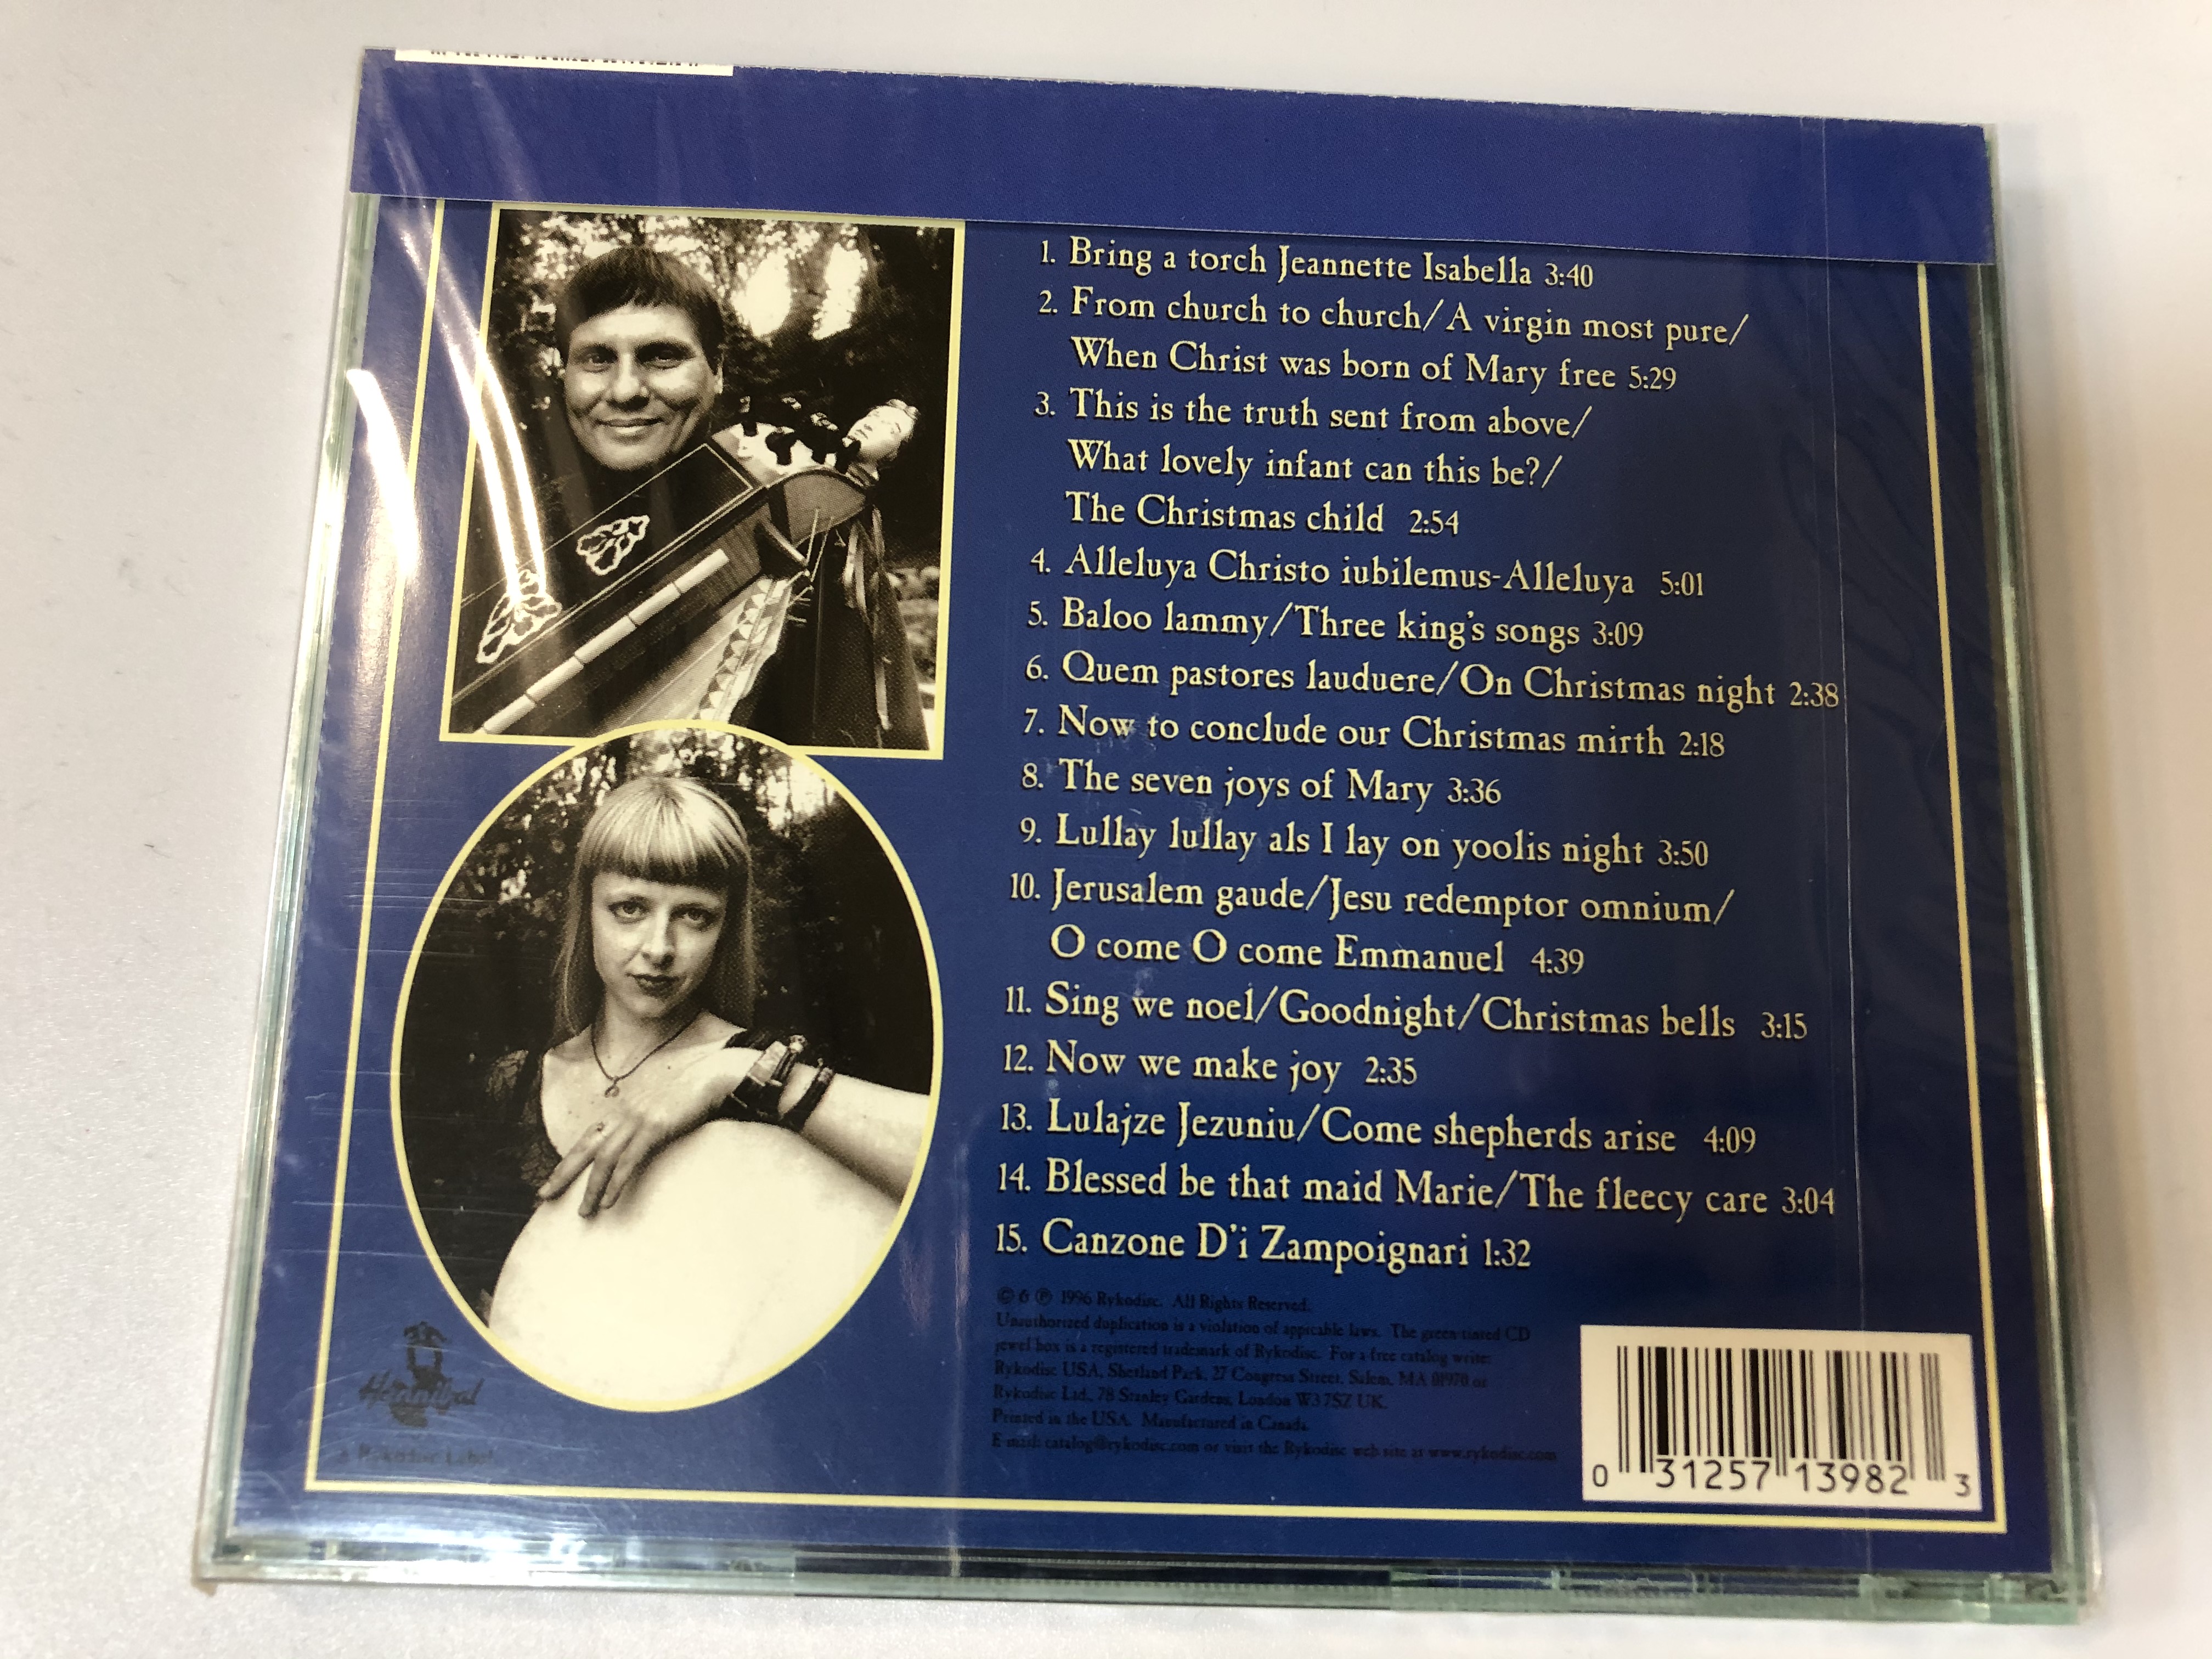 the-ancient-music-of-christmas-ethan-james-hannibal-records-audio-cd-1996-hncd-1398-2-.jpg